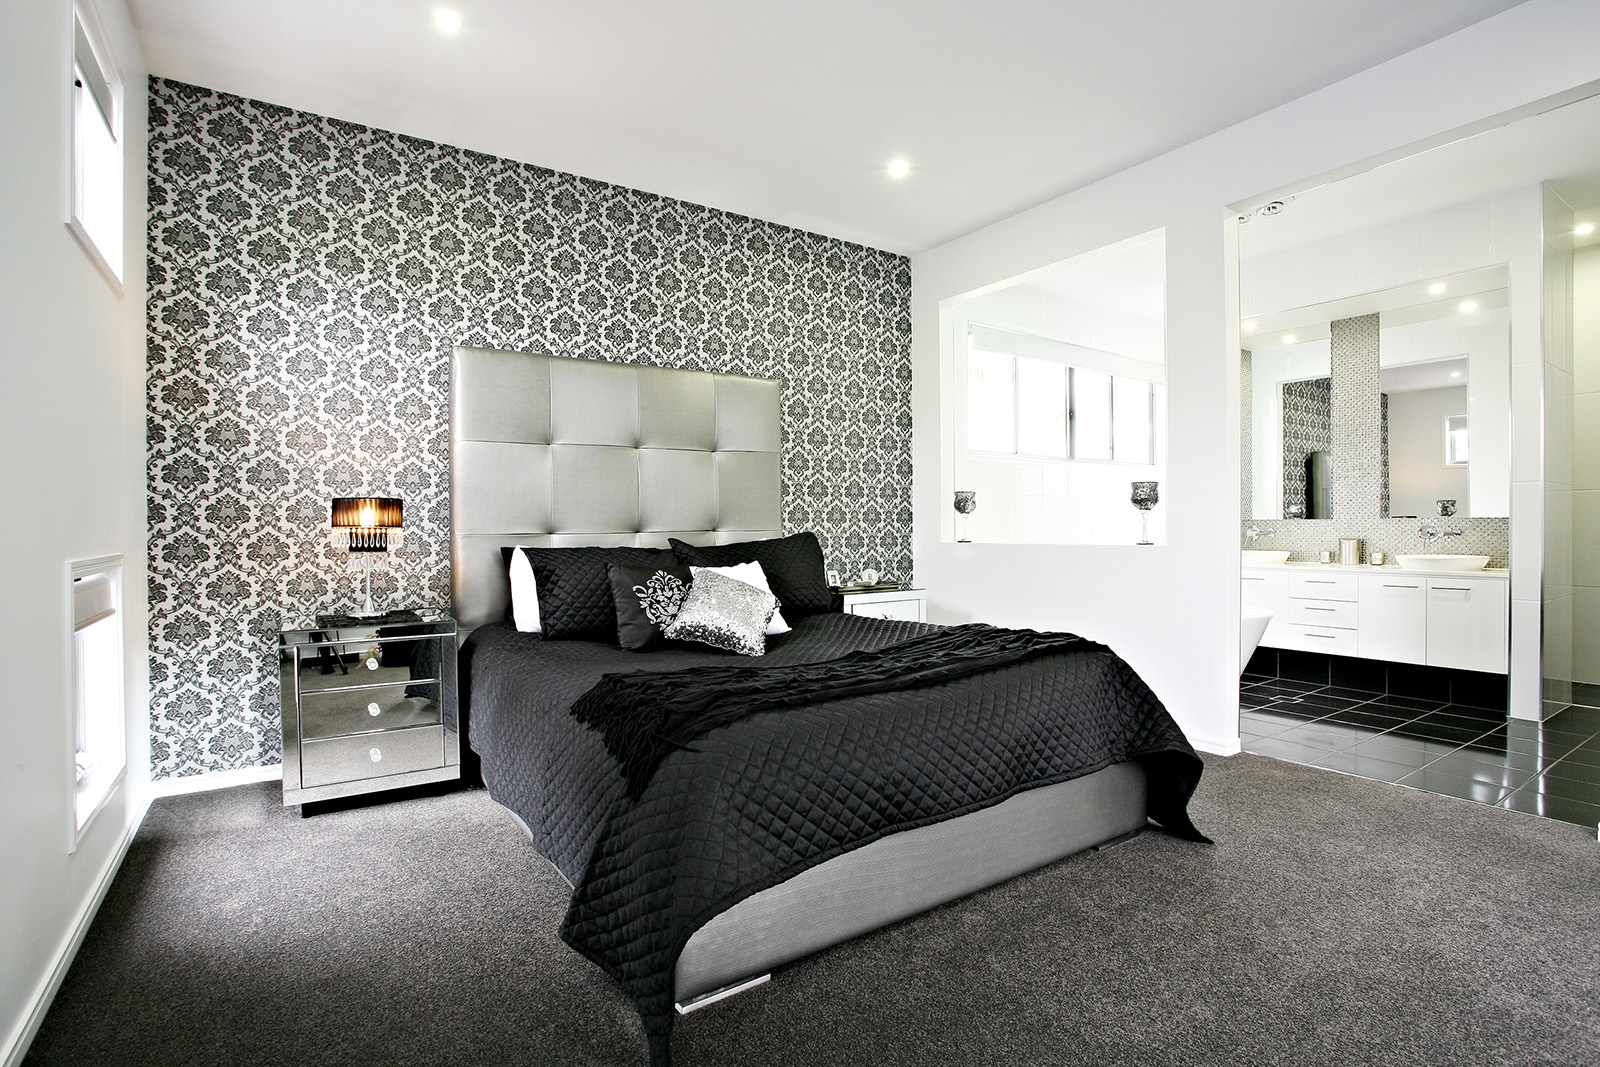  Download Green Feature Wallpaper Living Room Wall Design Ideas Photos 